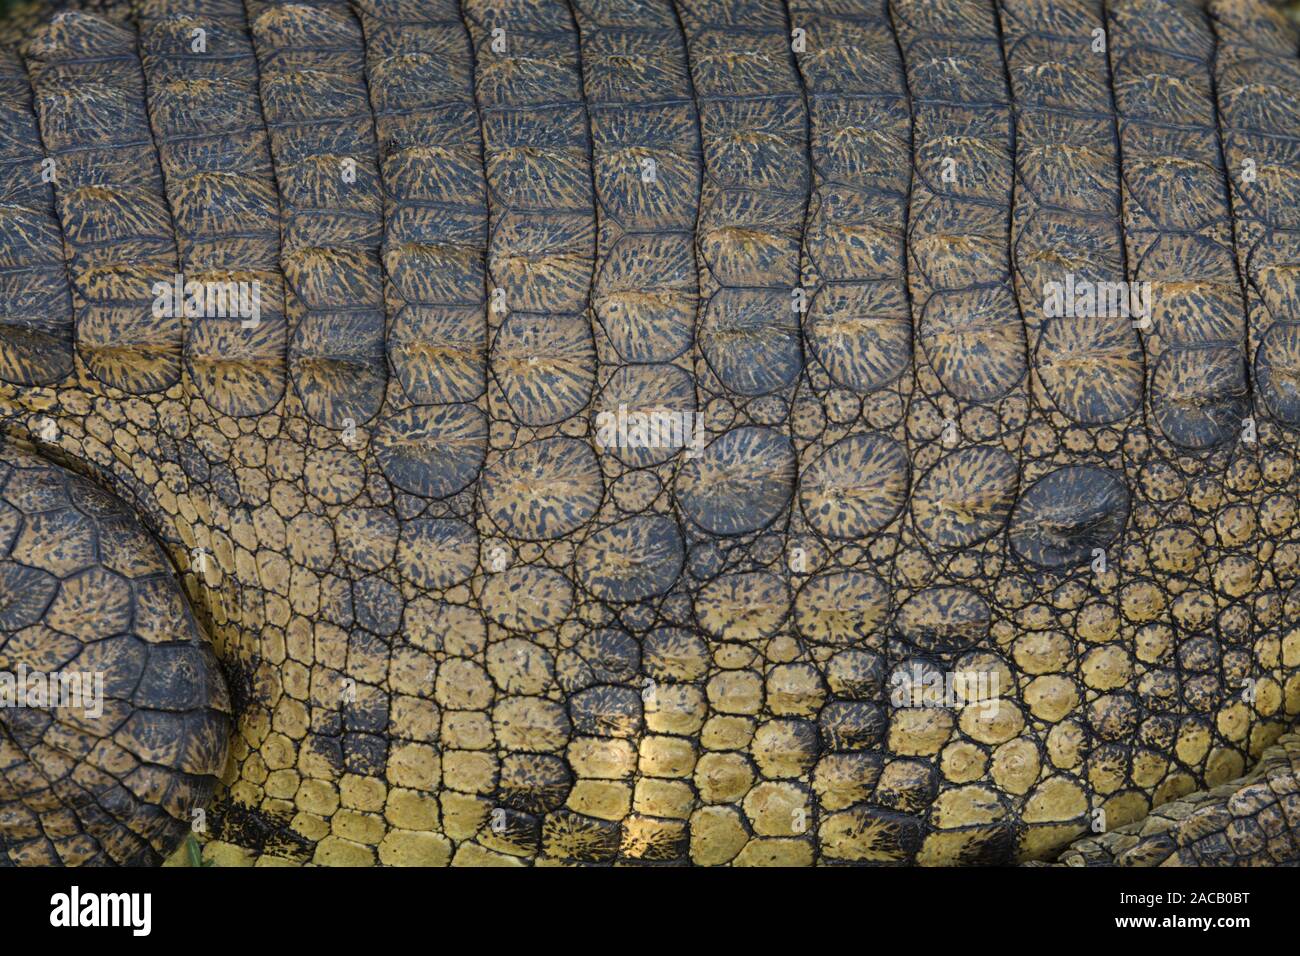 Scaly skin of a Nile crocodile Stock Photo